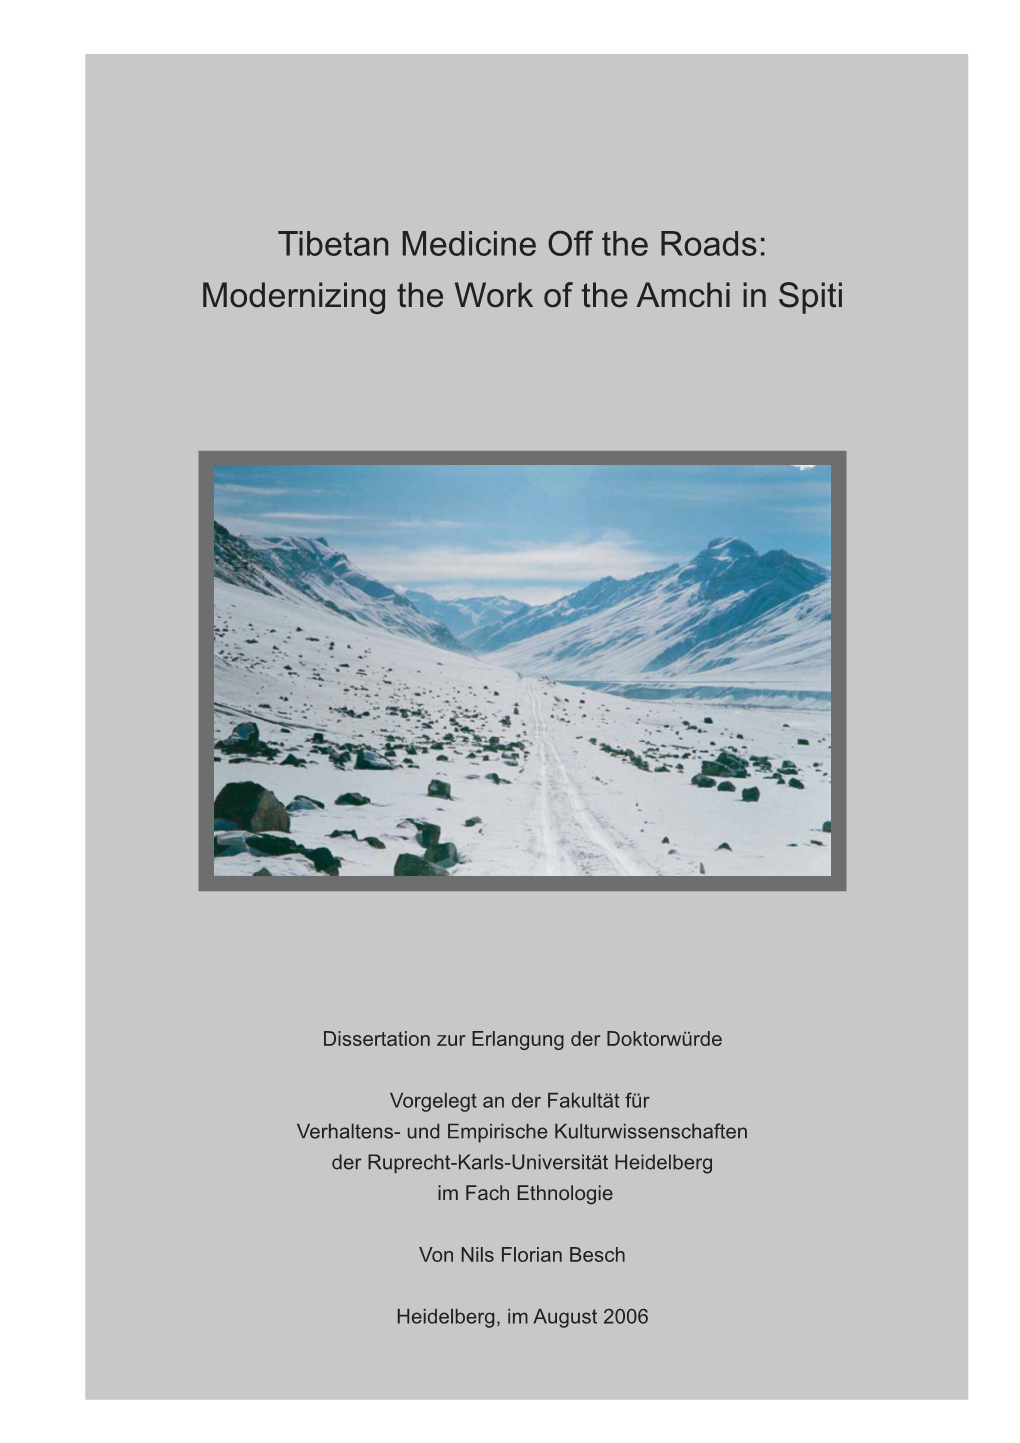 Tibetan Medicine Off the Roads: Modernizing the Work of the Amchi in Spiti